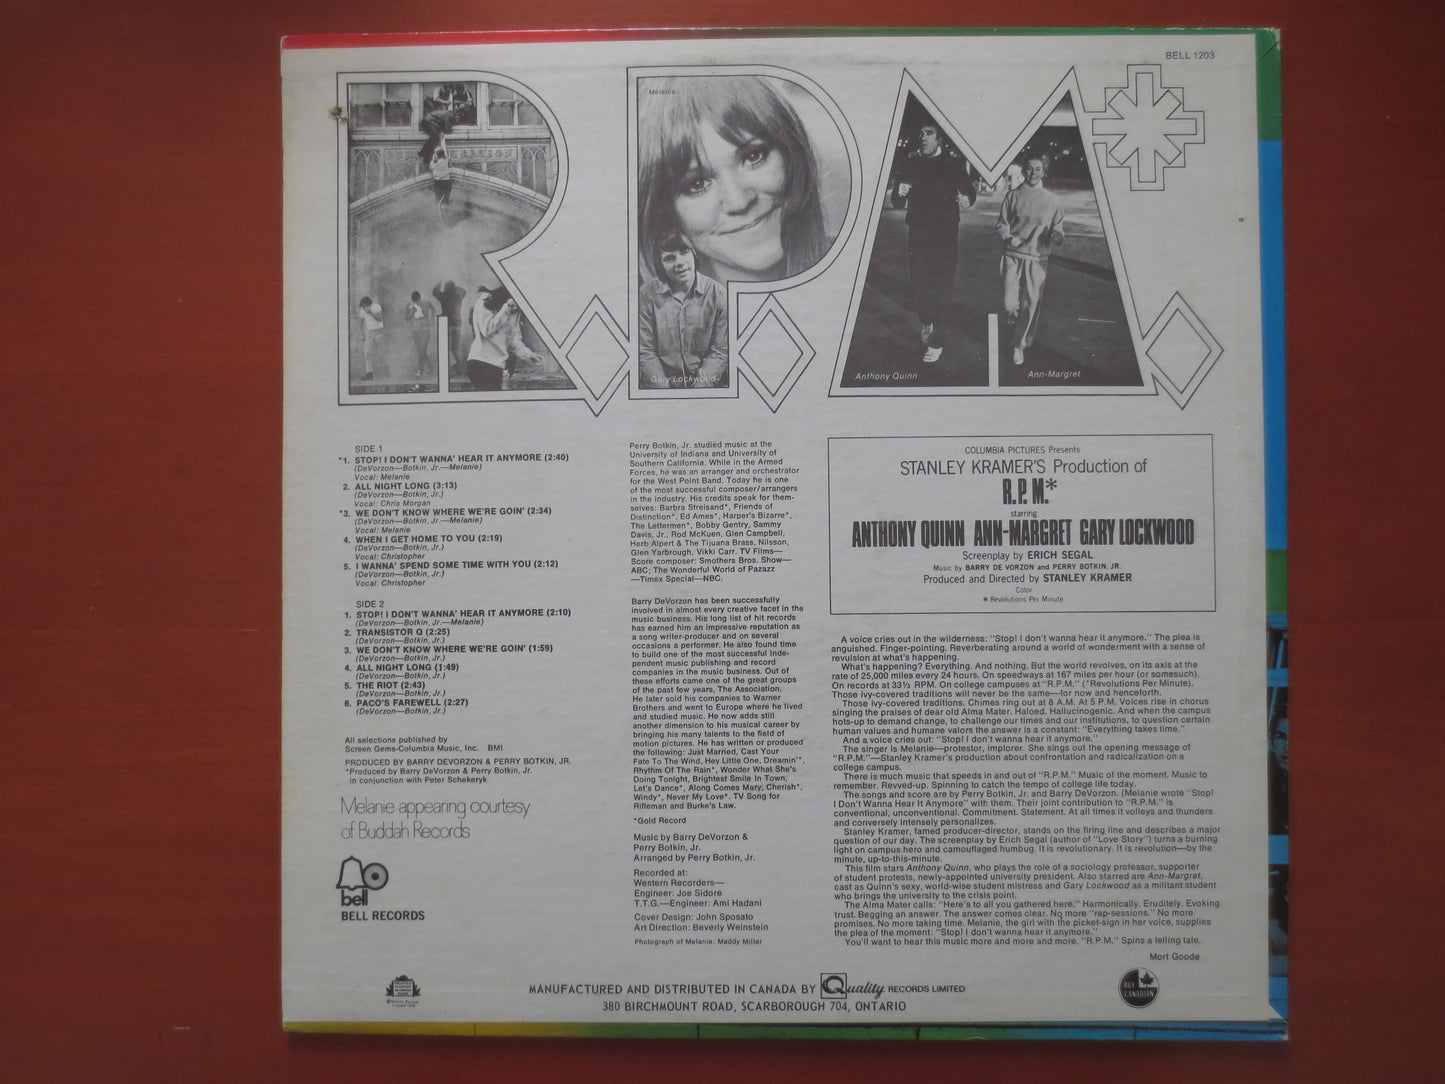 MELANIE, RPM Movie Soundtrack, MELANIE Album, Melanie Record, Vintage Vinyl, Melanie Lp, Melanie Vinyl, Vinyl, 1970 Records